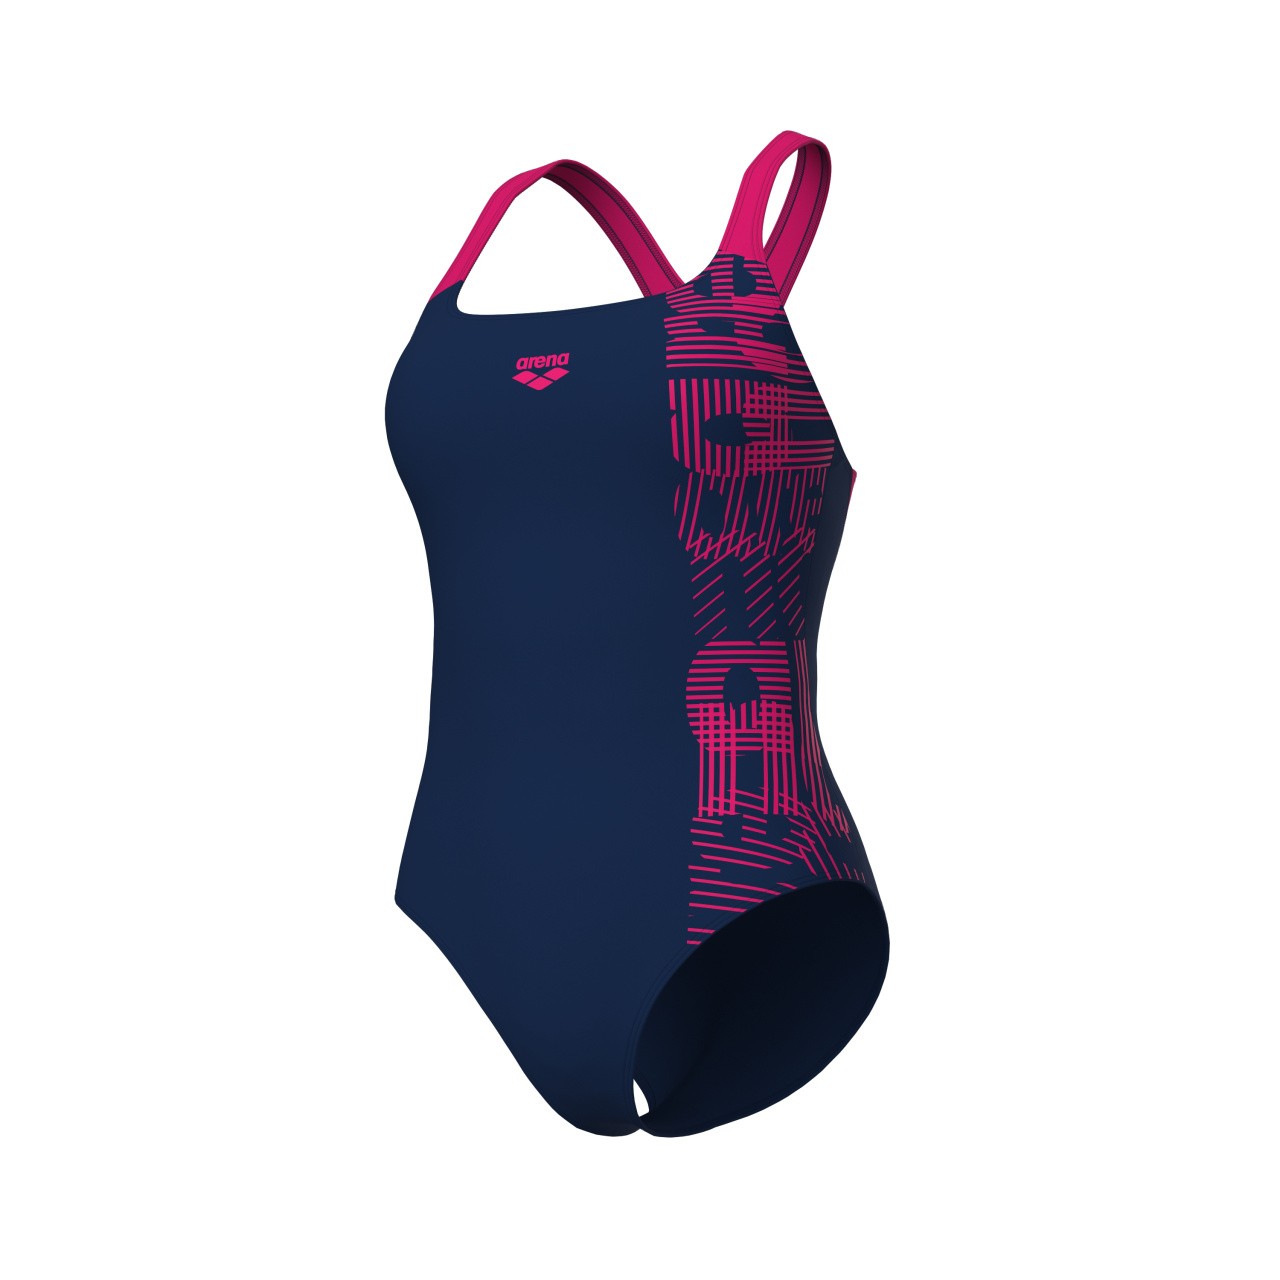 W Swimsuit Control Pro Back Graphic B navy-freak